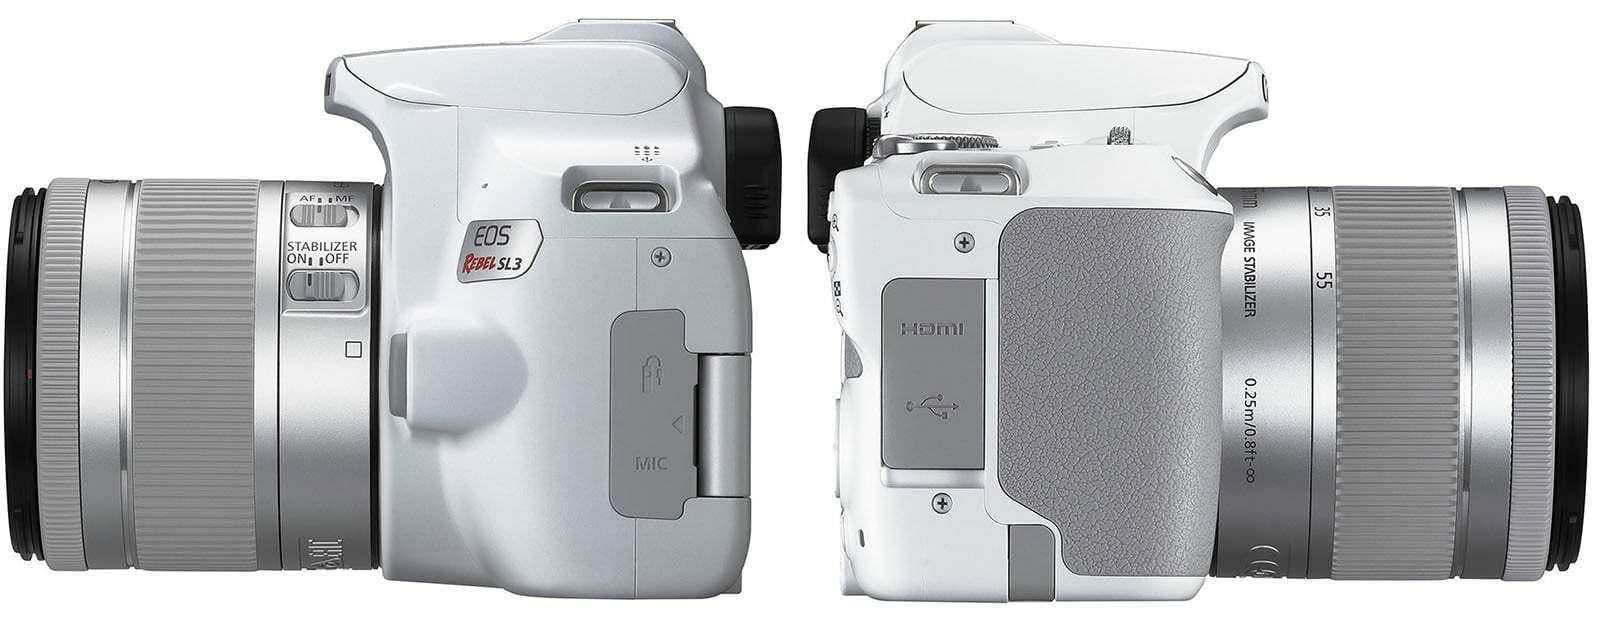 Canon เปิดตัว Canon EOS 250D กล้อง DSLR รุ่นเล็ก สเปกจัดเต็ม มี Eye Detection 3